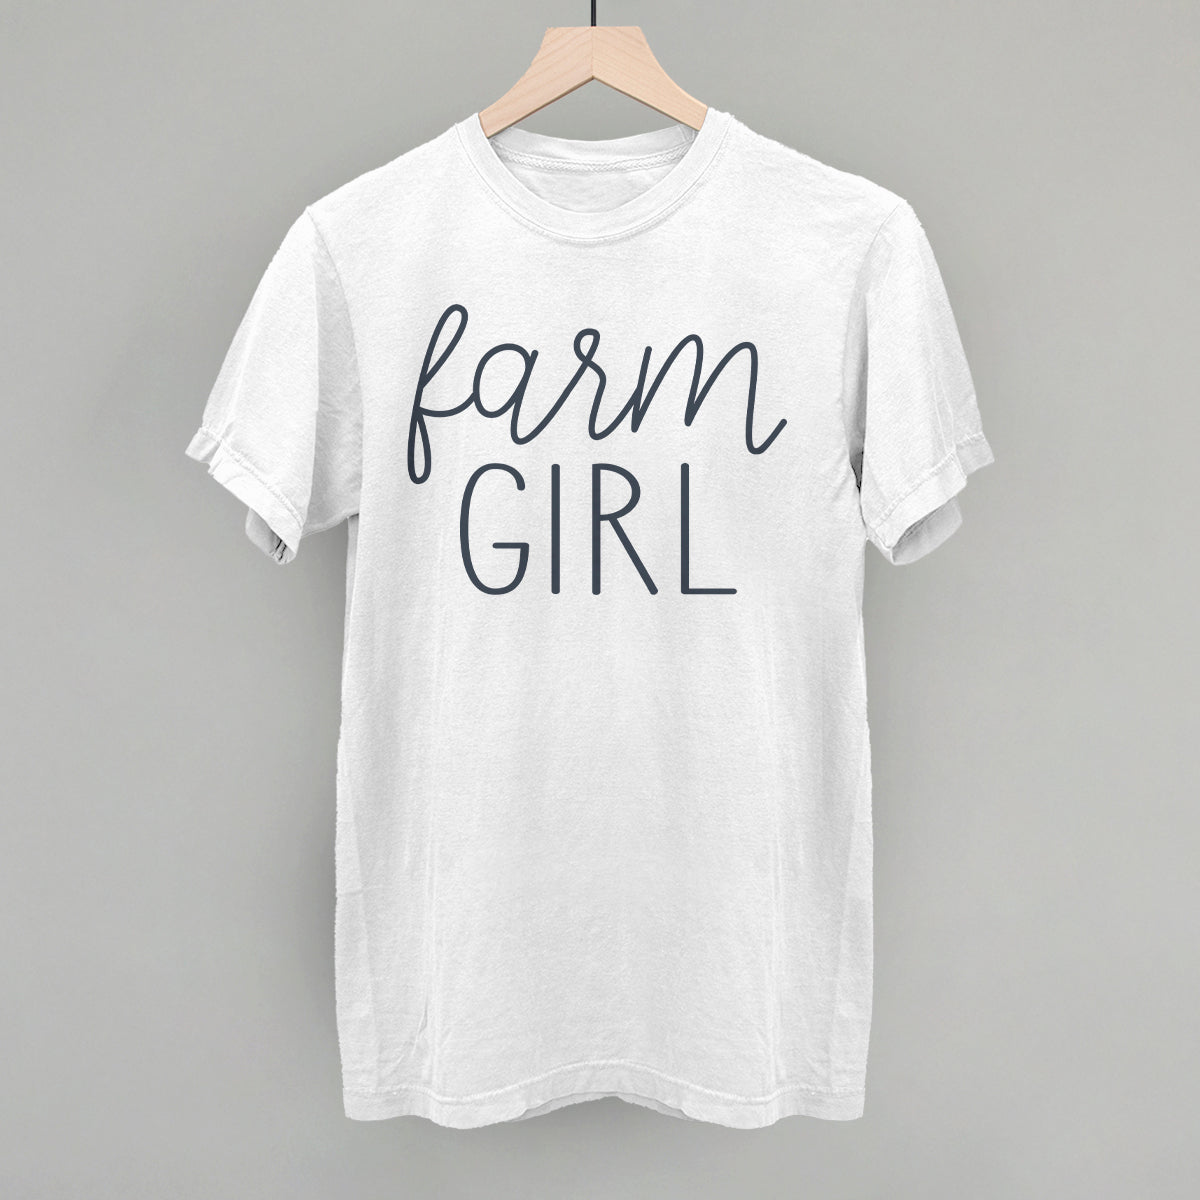 Farm Girl